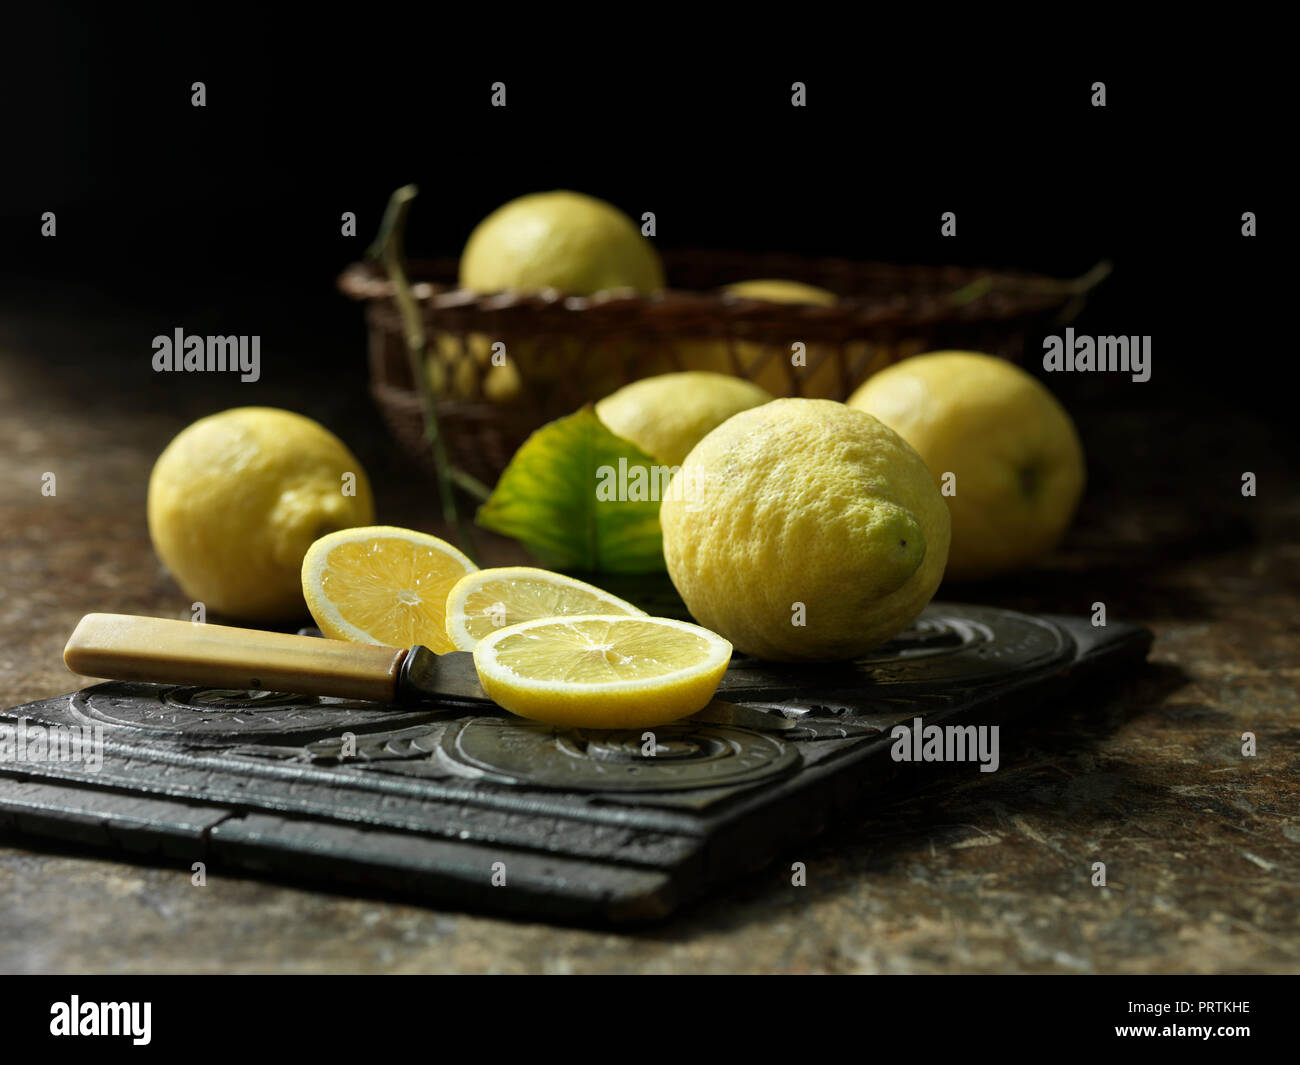 Whole and sliced unwaxed lemons Stock Photo